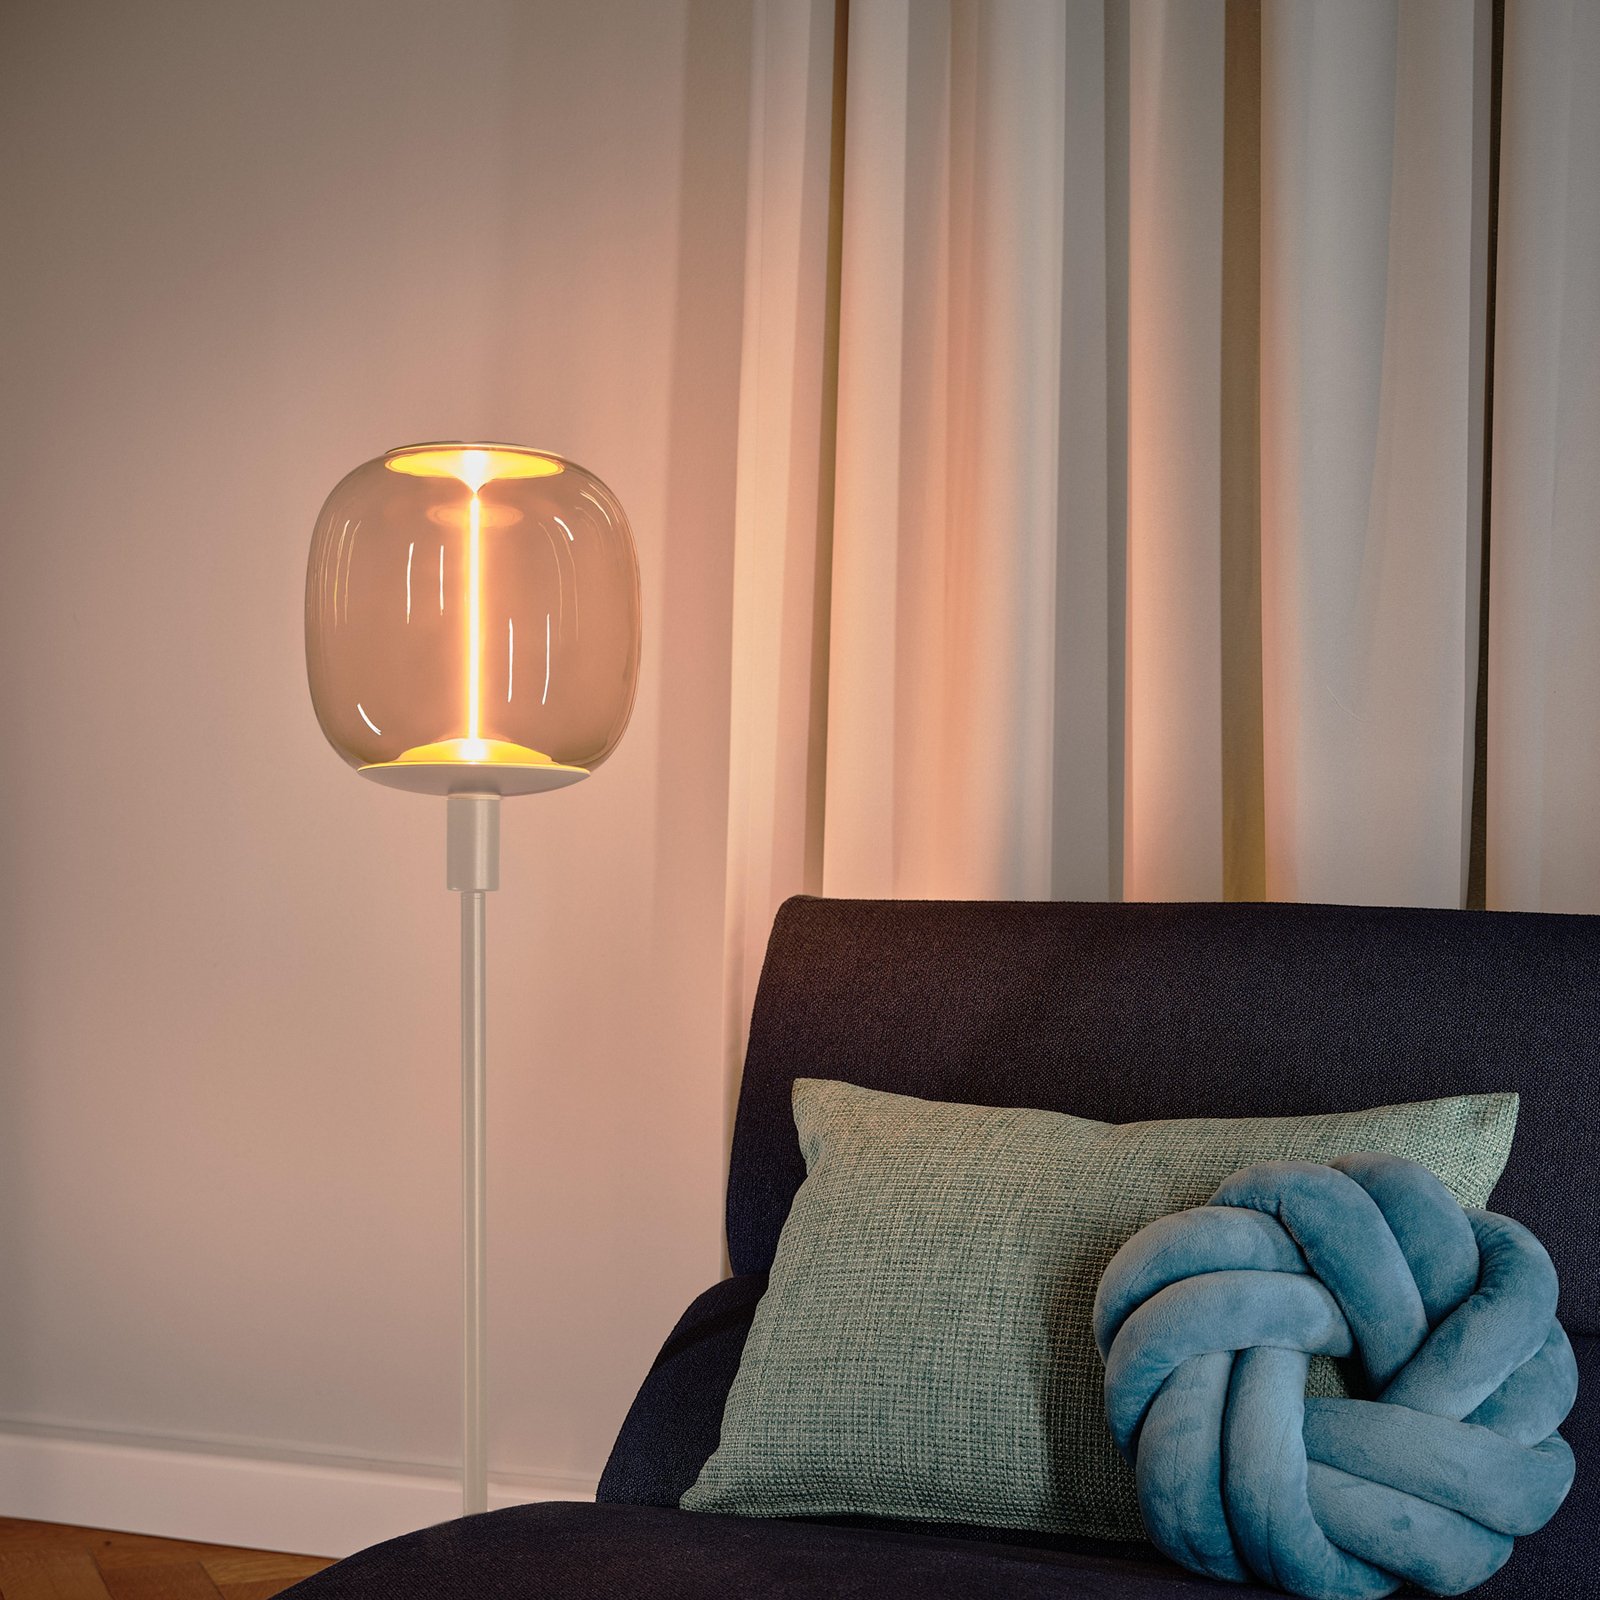 LEDVANCE vloerlamp Decor Stick E27, hoogte 78 cm, beige